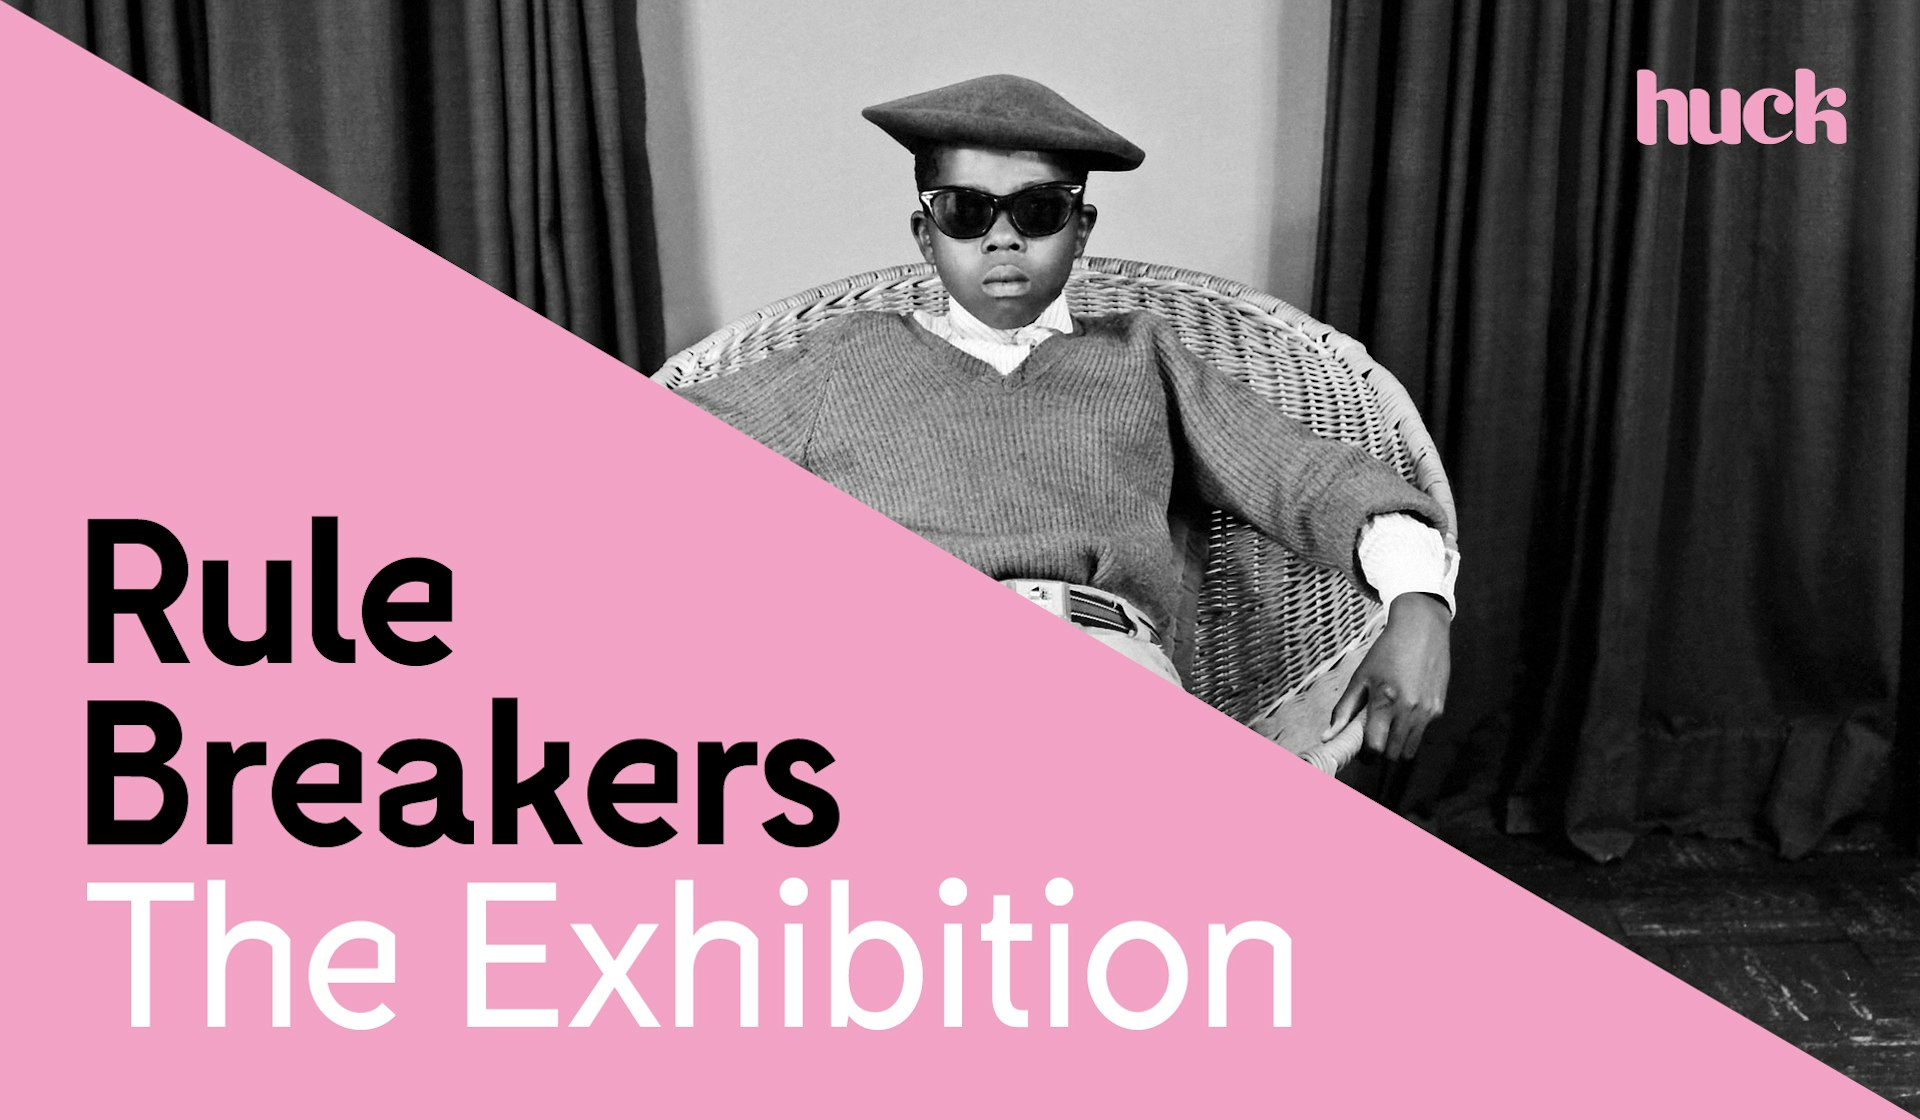 Huck presents Rule-Breakers: The Exhibition